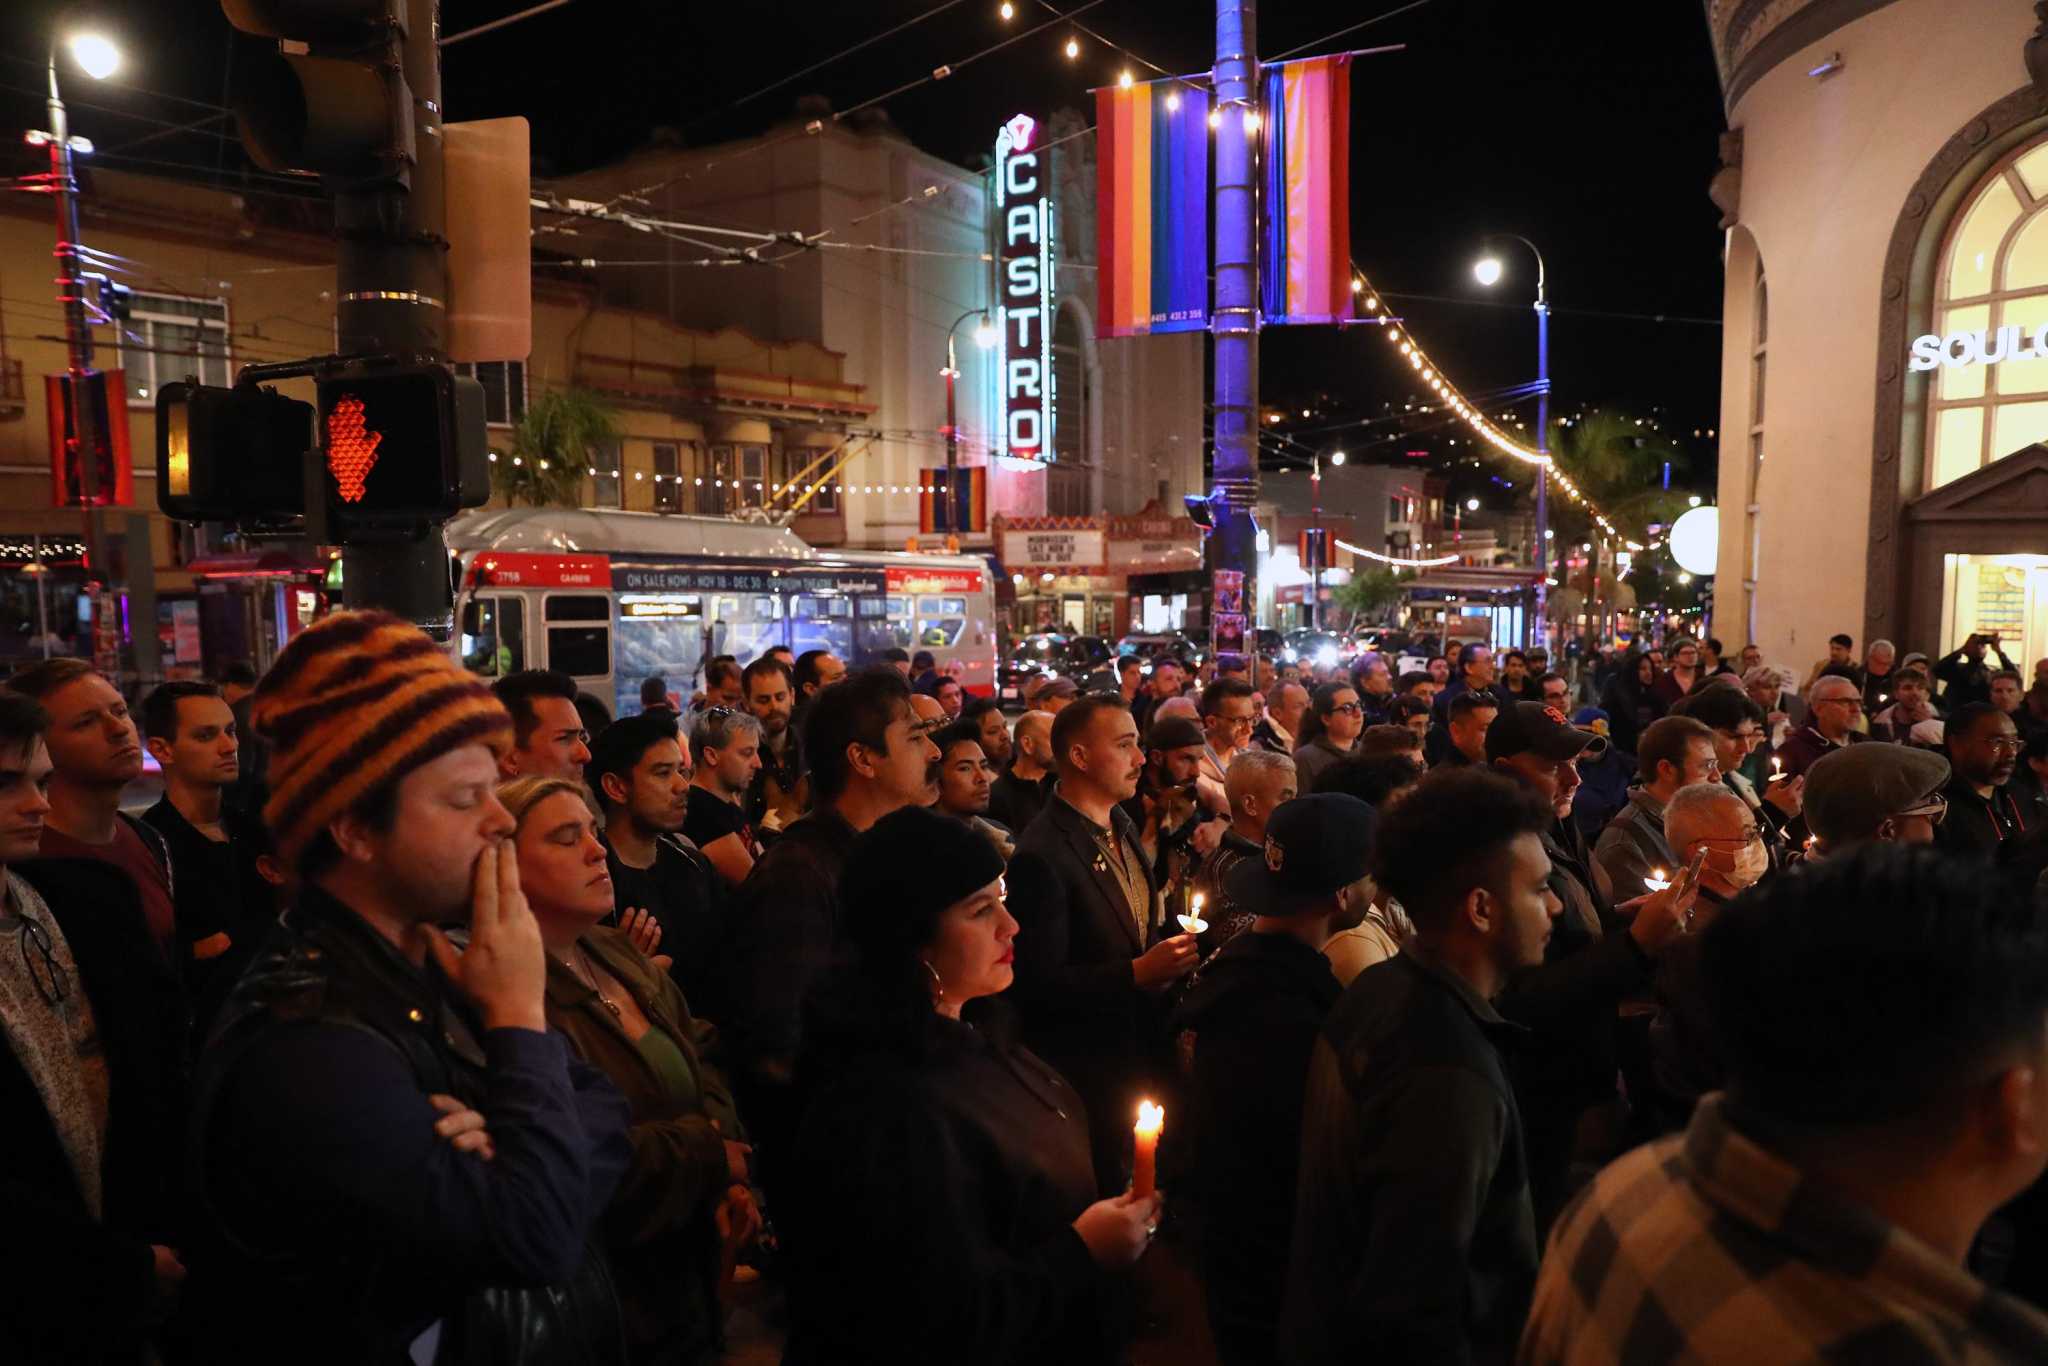 Colorado mass nightclub shooting fueled by anti-LGBTQ rhetoric, Bay Area mourners